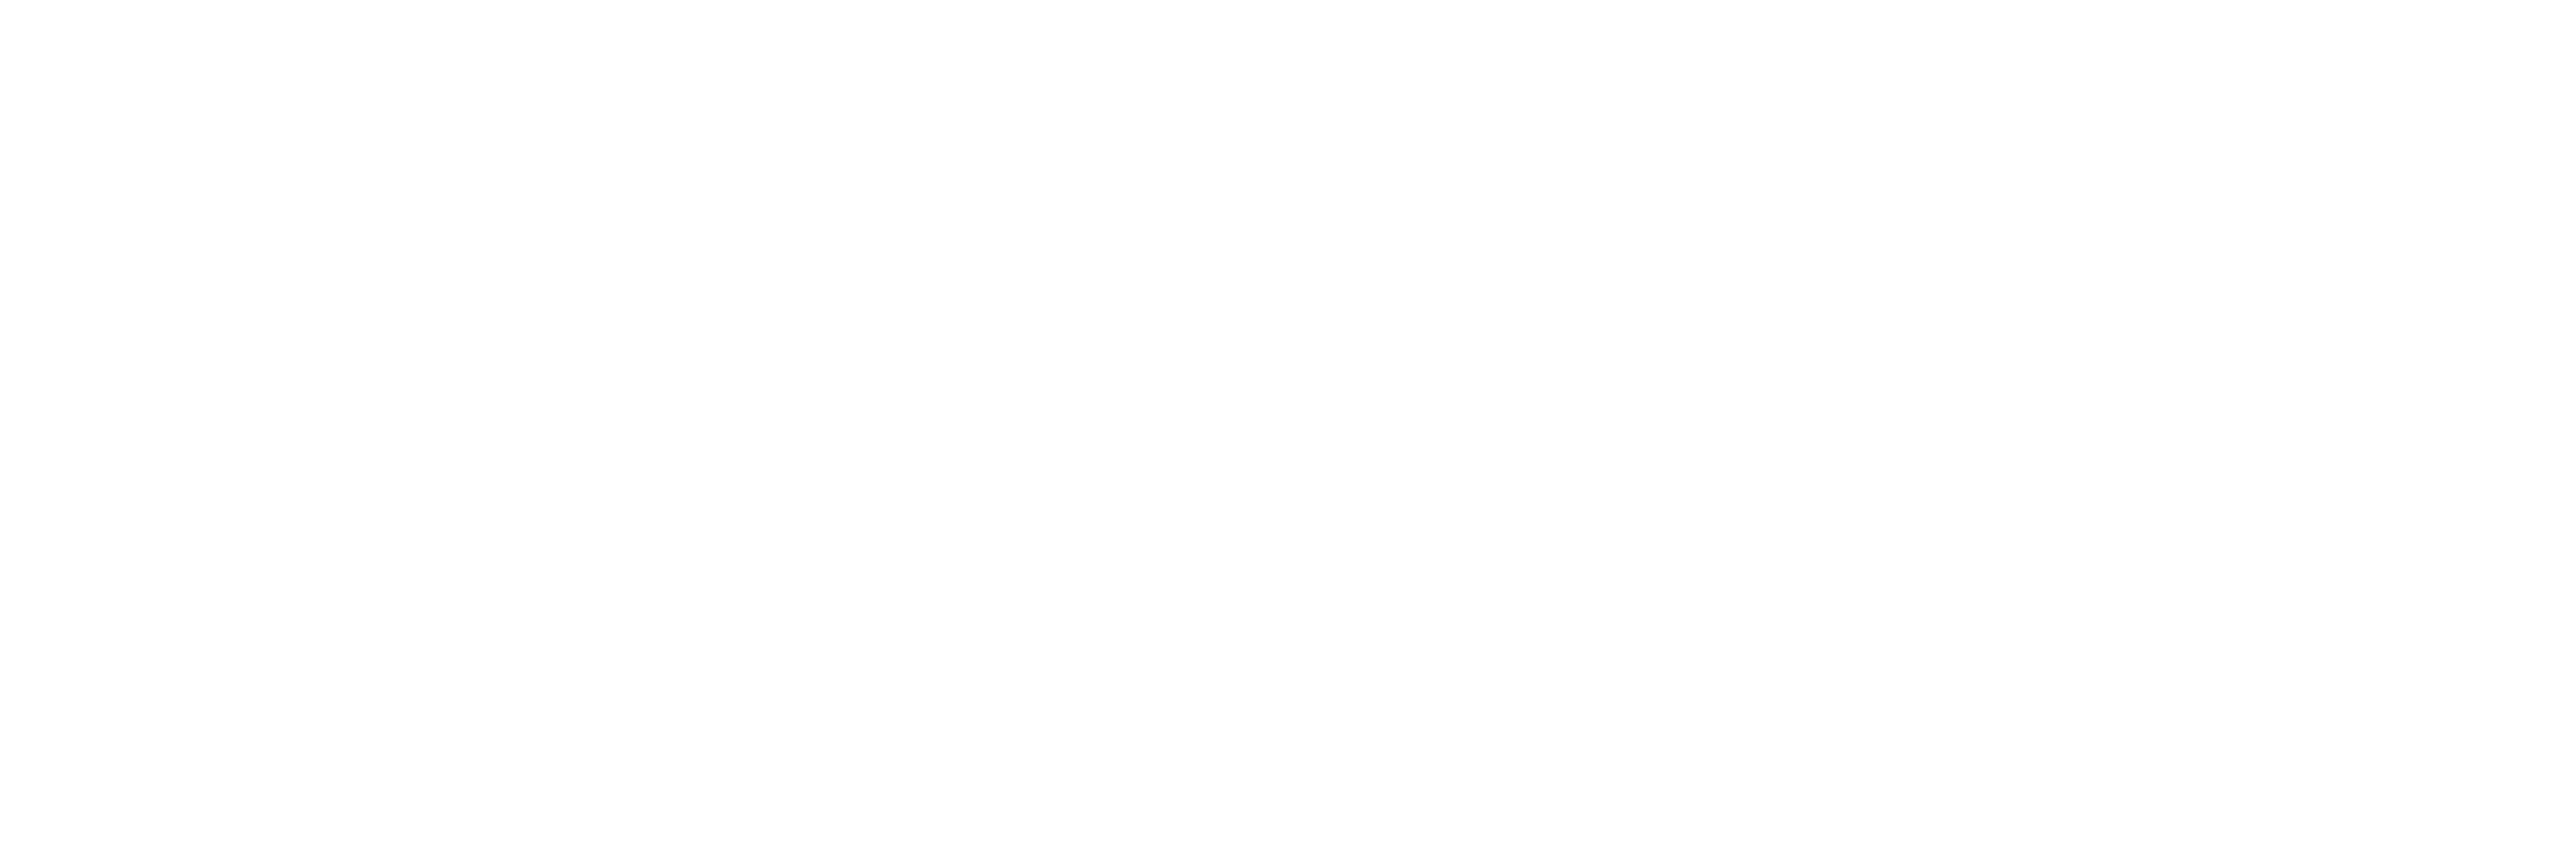 Junior Achievement of Southern California